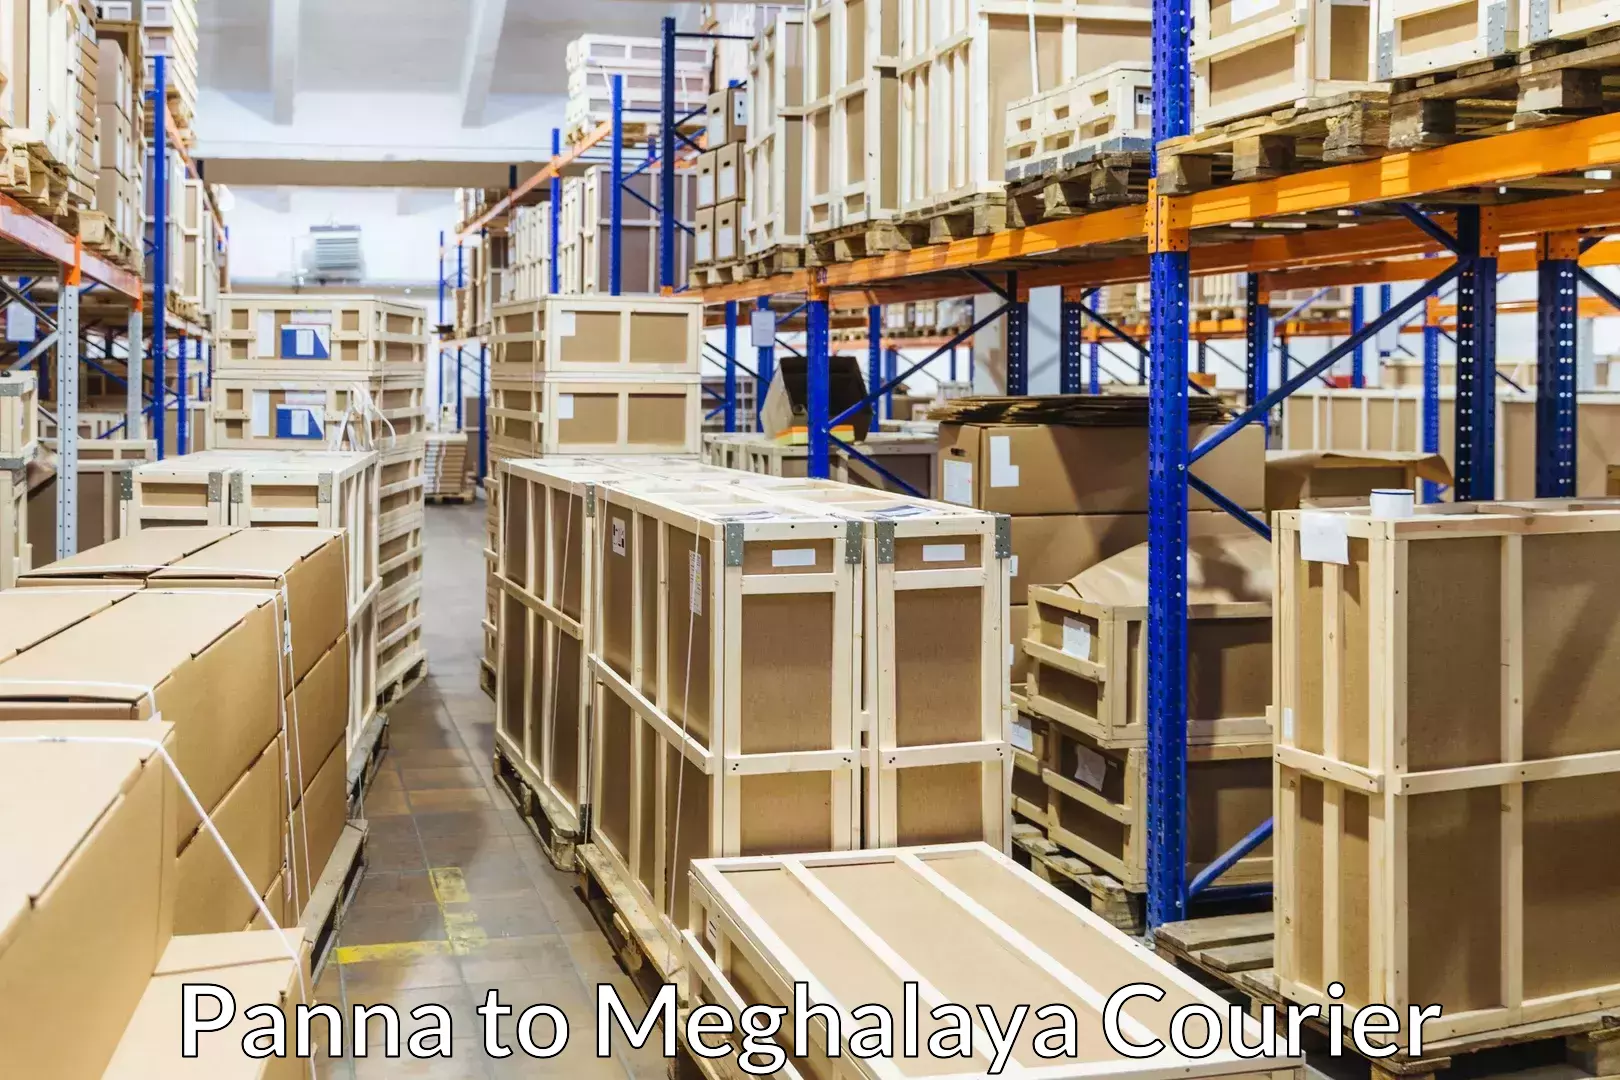 Trusted moving company Panna to Meghalaya